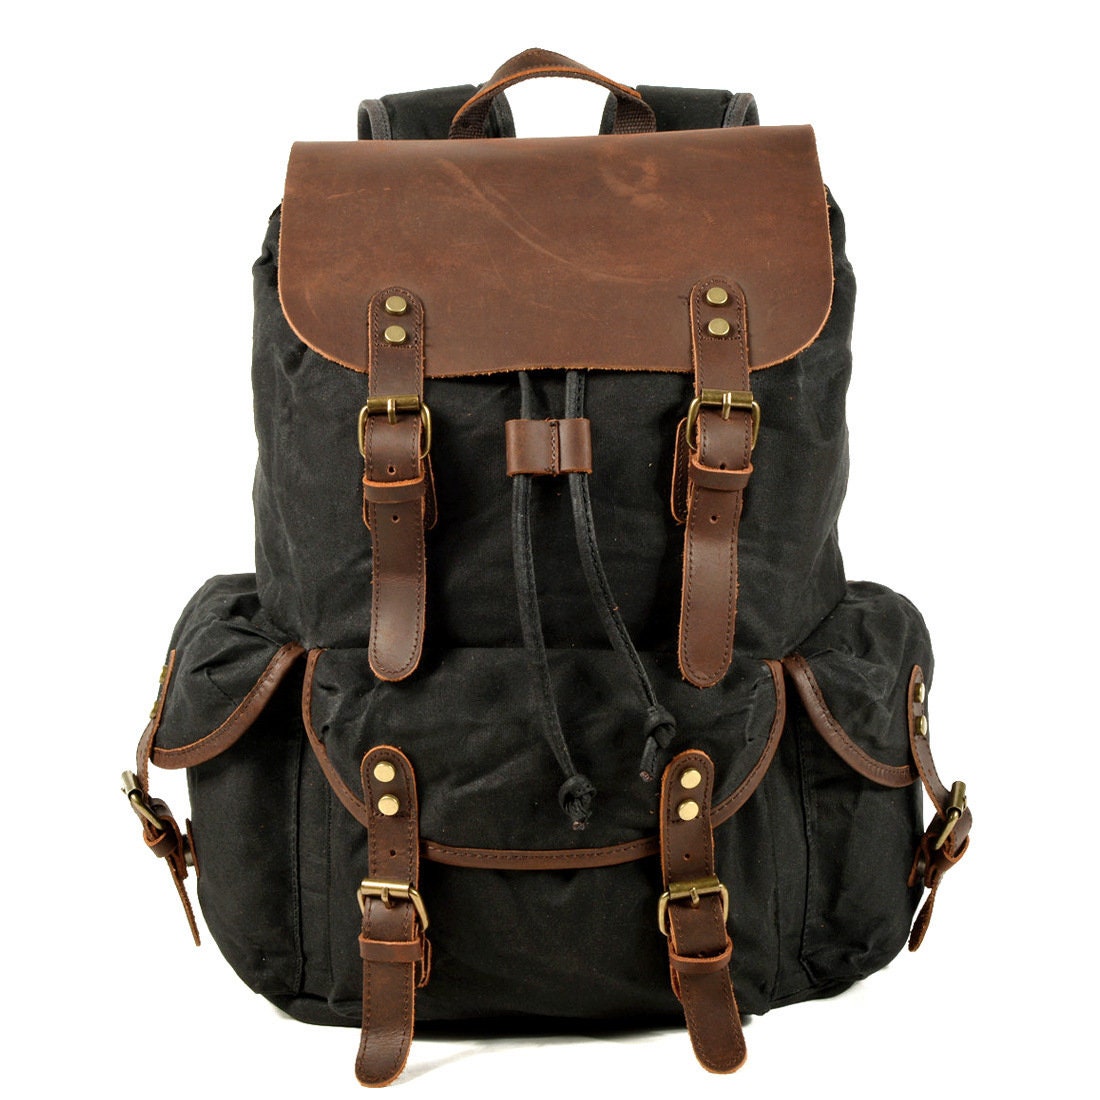 Dejaroo Canvas Travel Laptop Backpack for Women, Men or Kids - Everyda